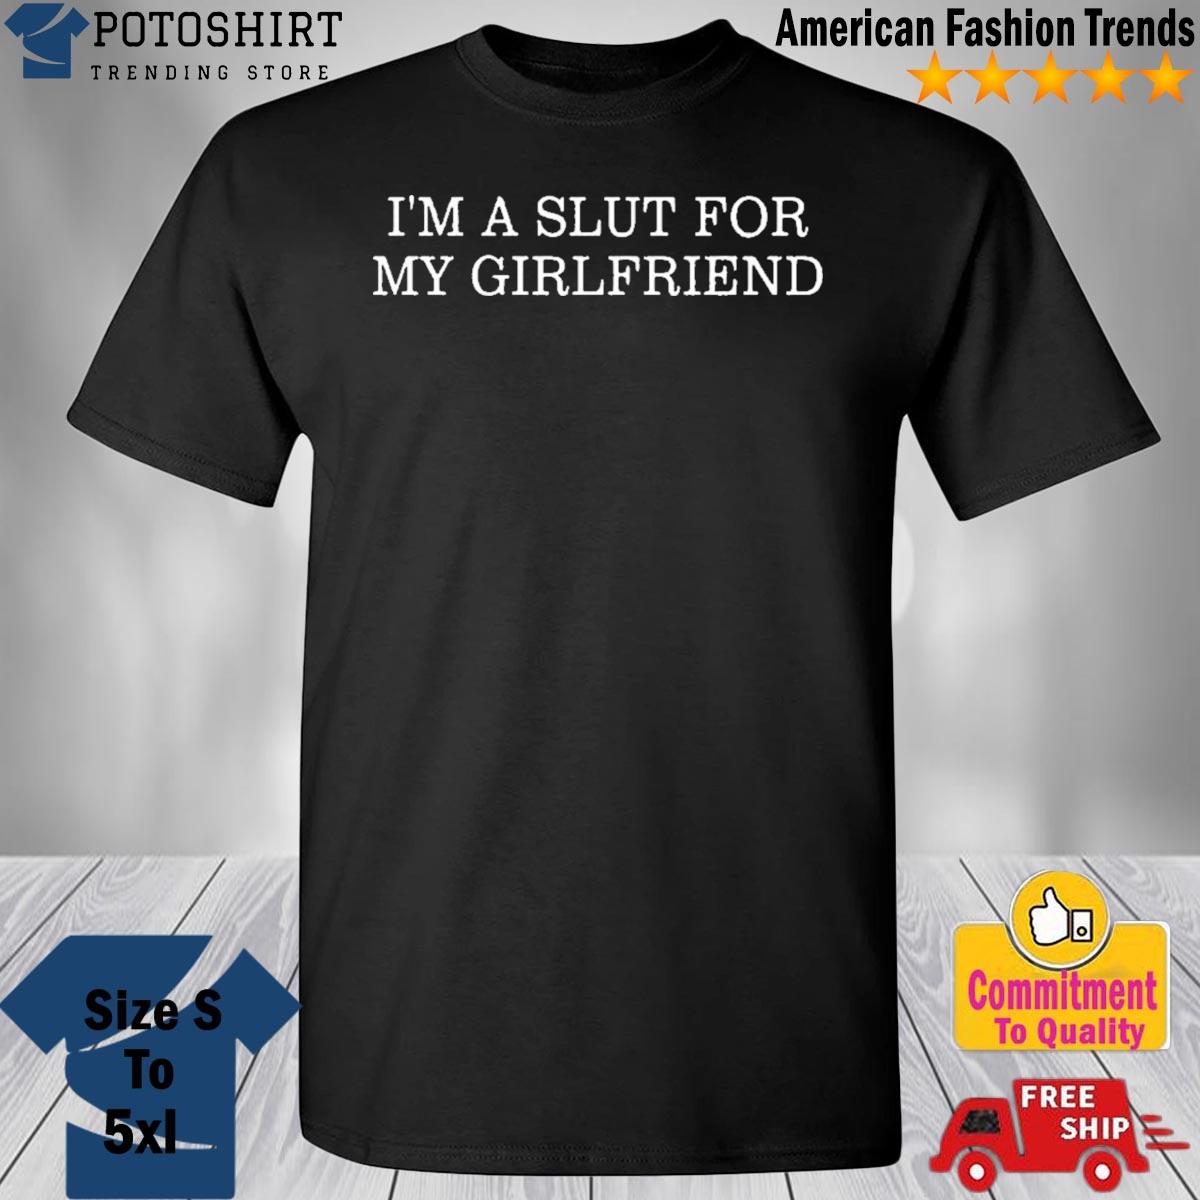 I’m A Slut For My Girlfriend Tee Shirt